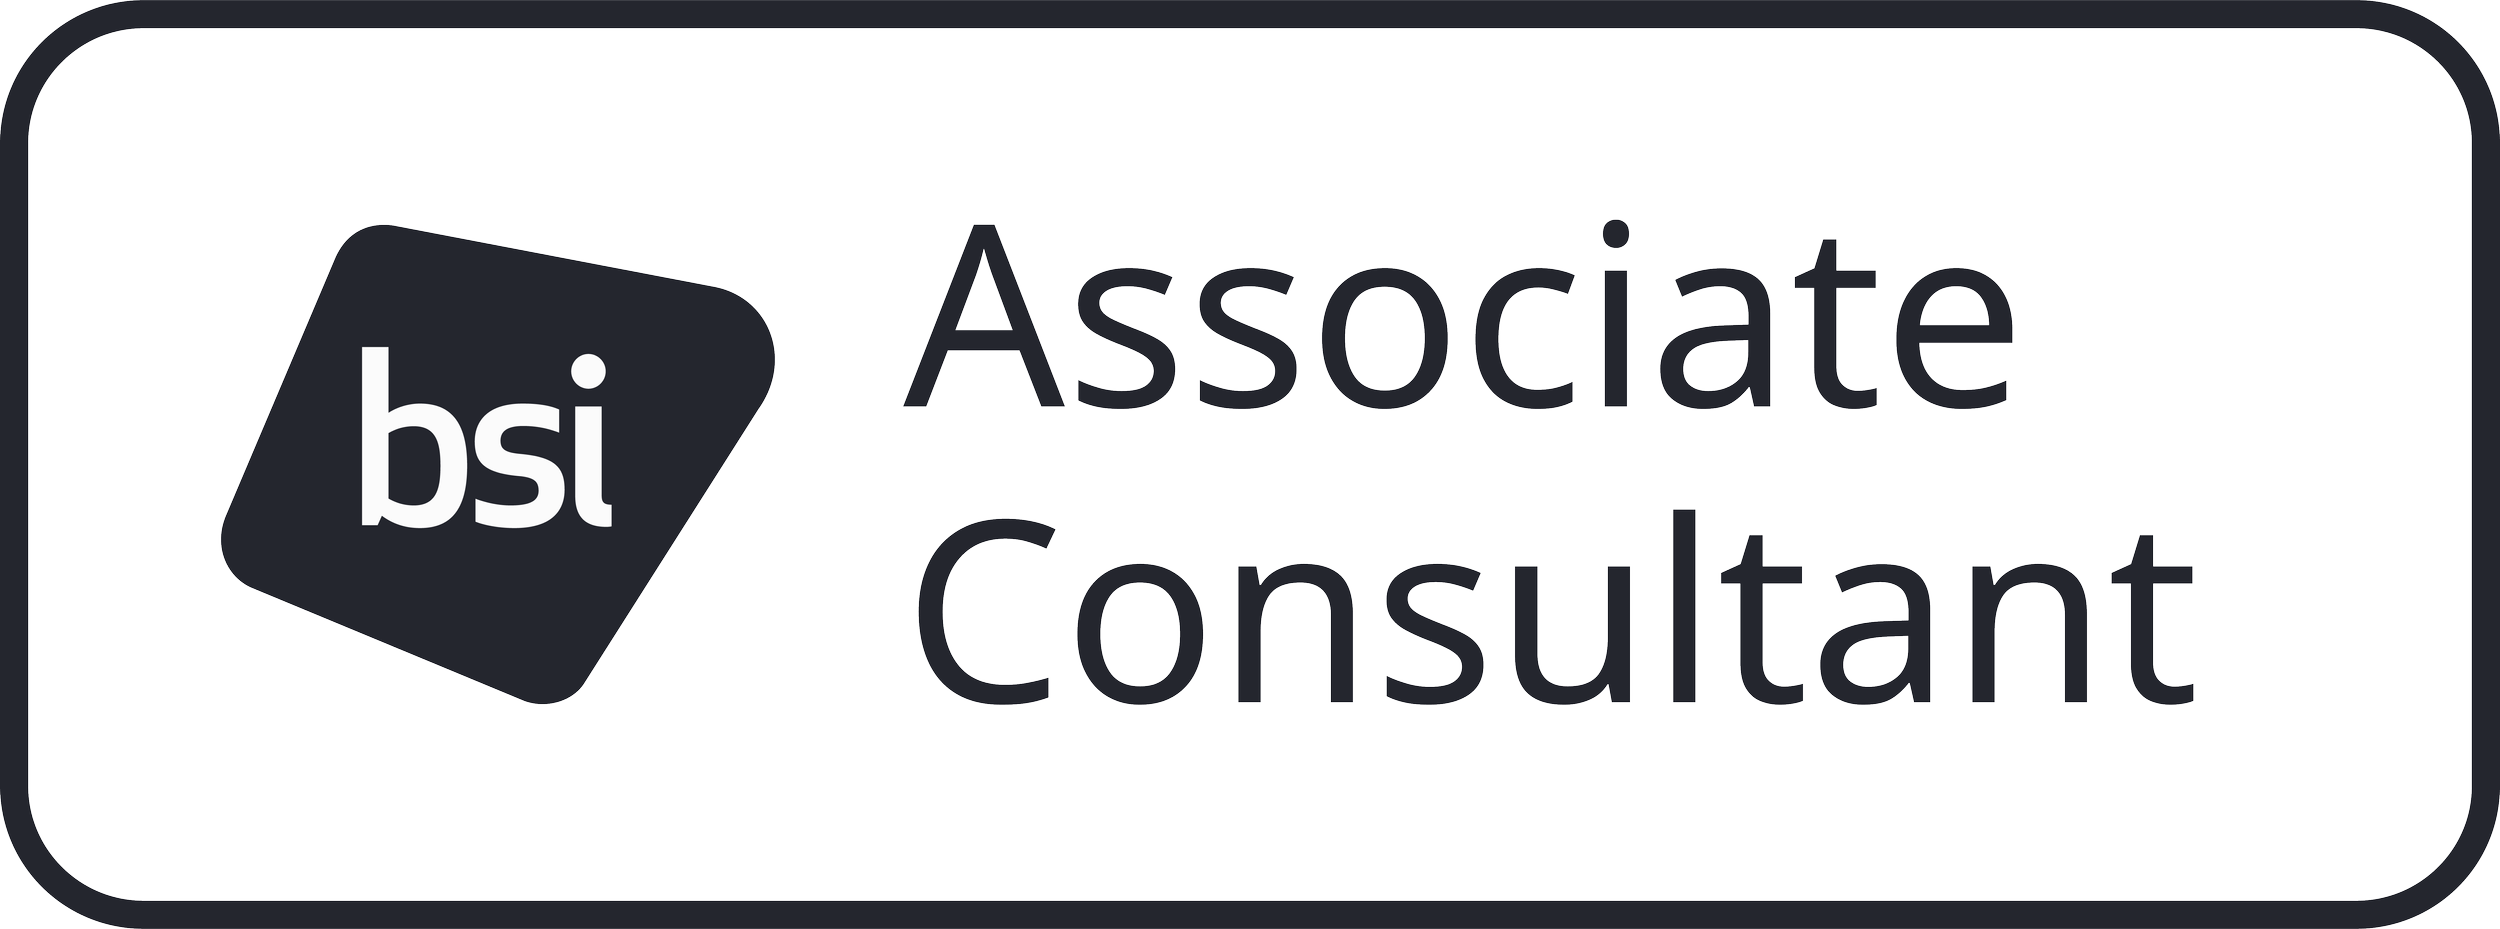 BSI_Associate_Consultant_badge.png